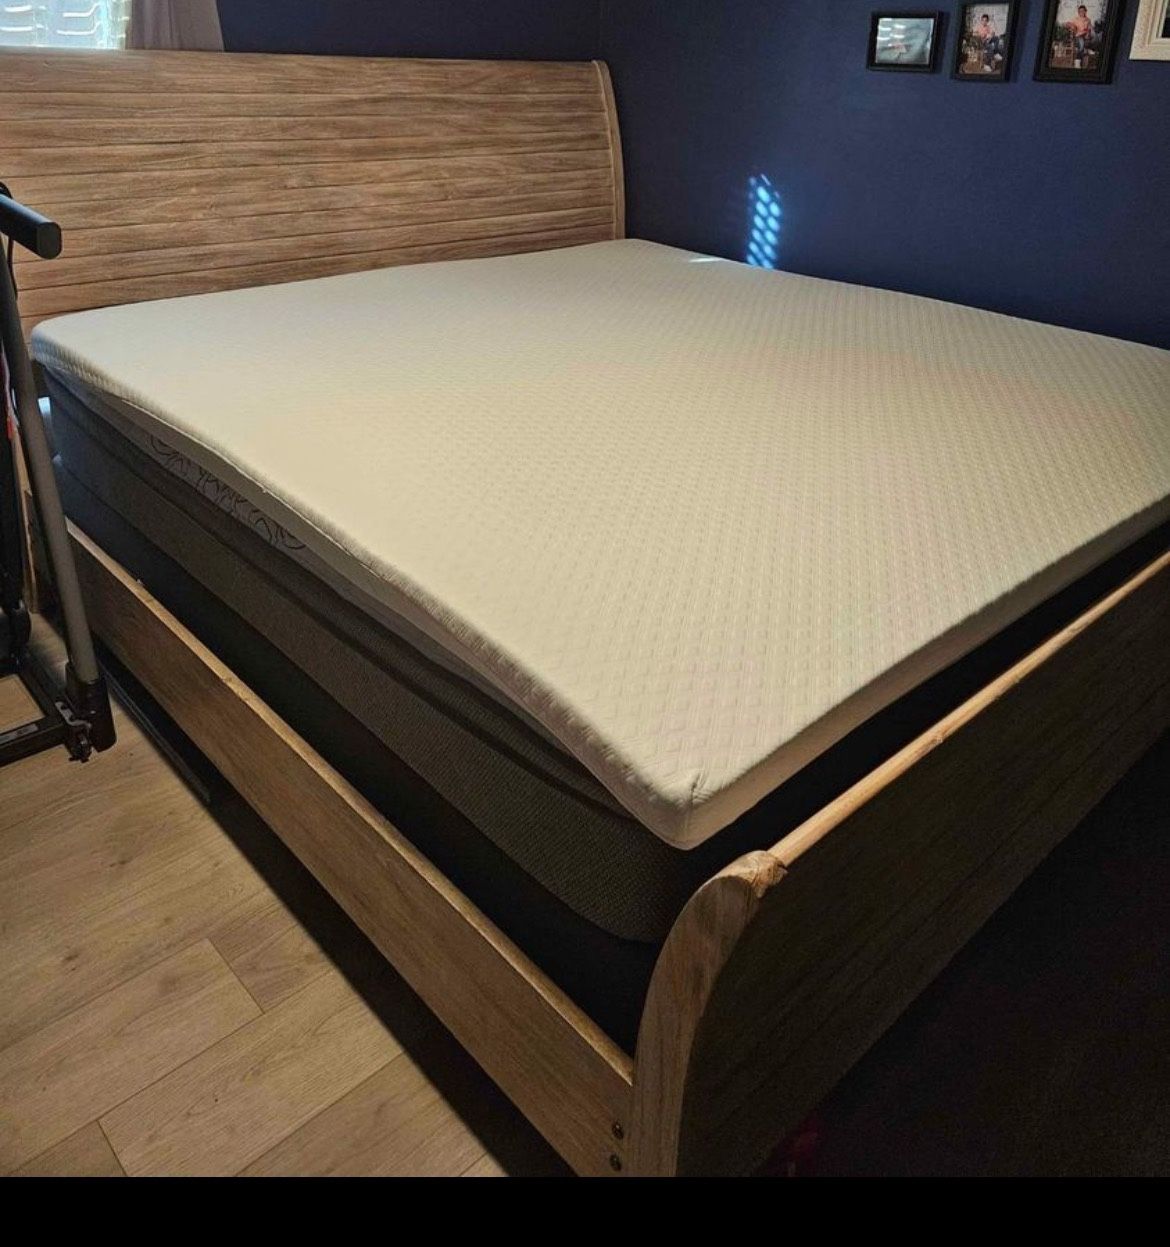 King bed room set mattress and bed frame